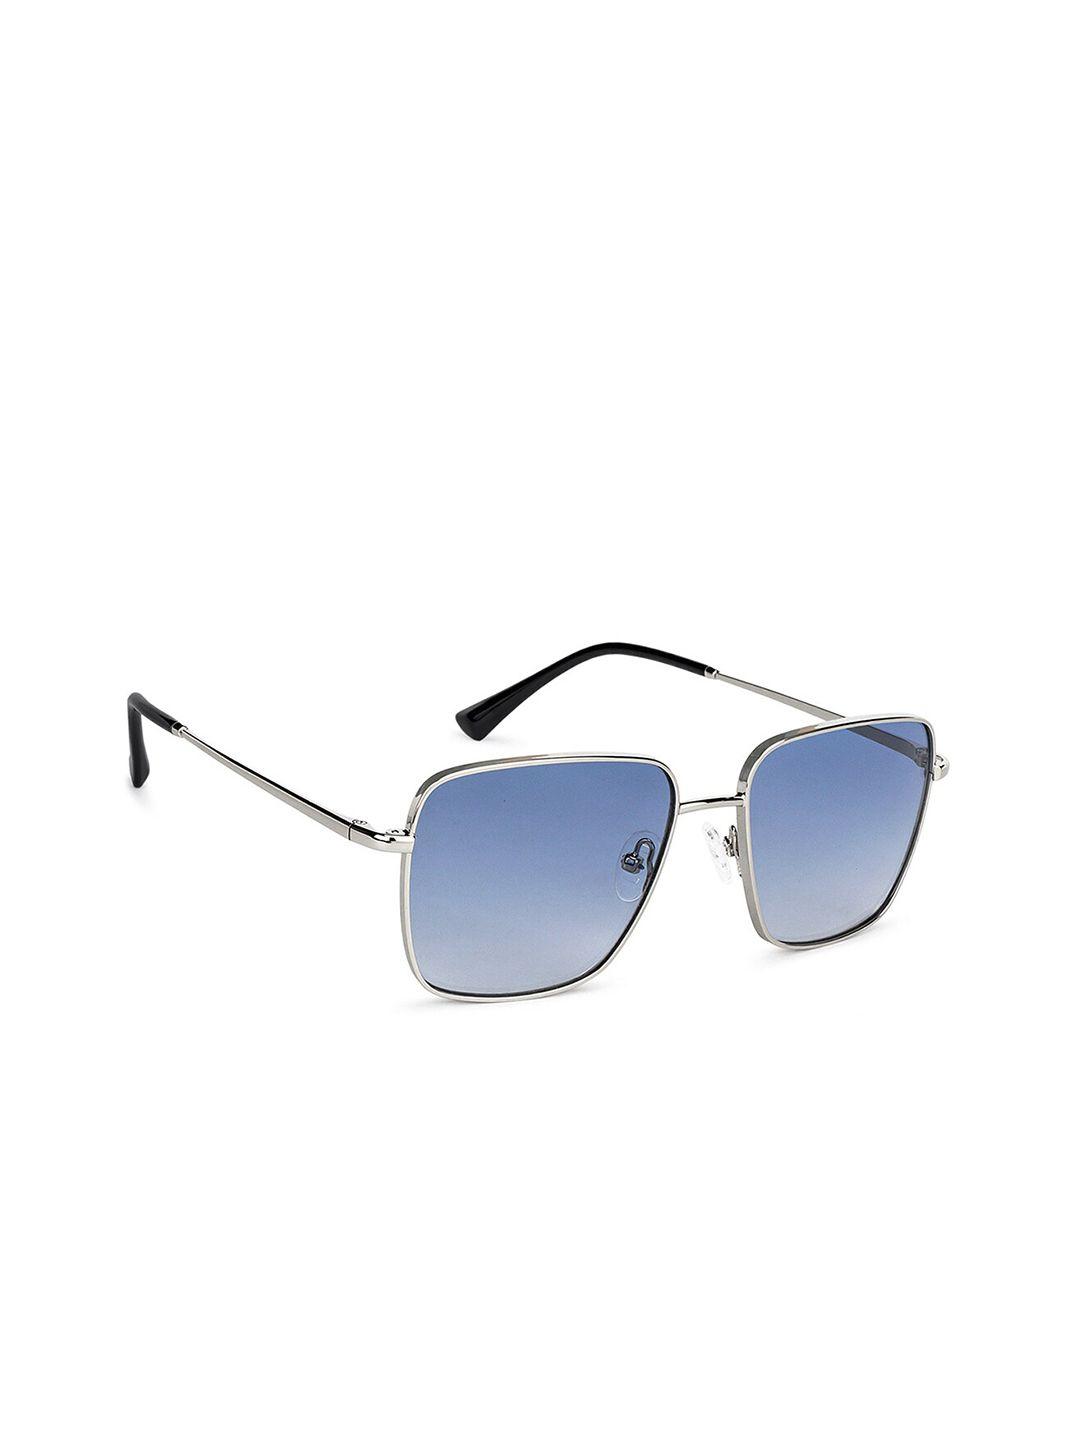 john-jacobs-full-rim-square-sunglasses-with-uv-protected-lens-137154